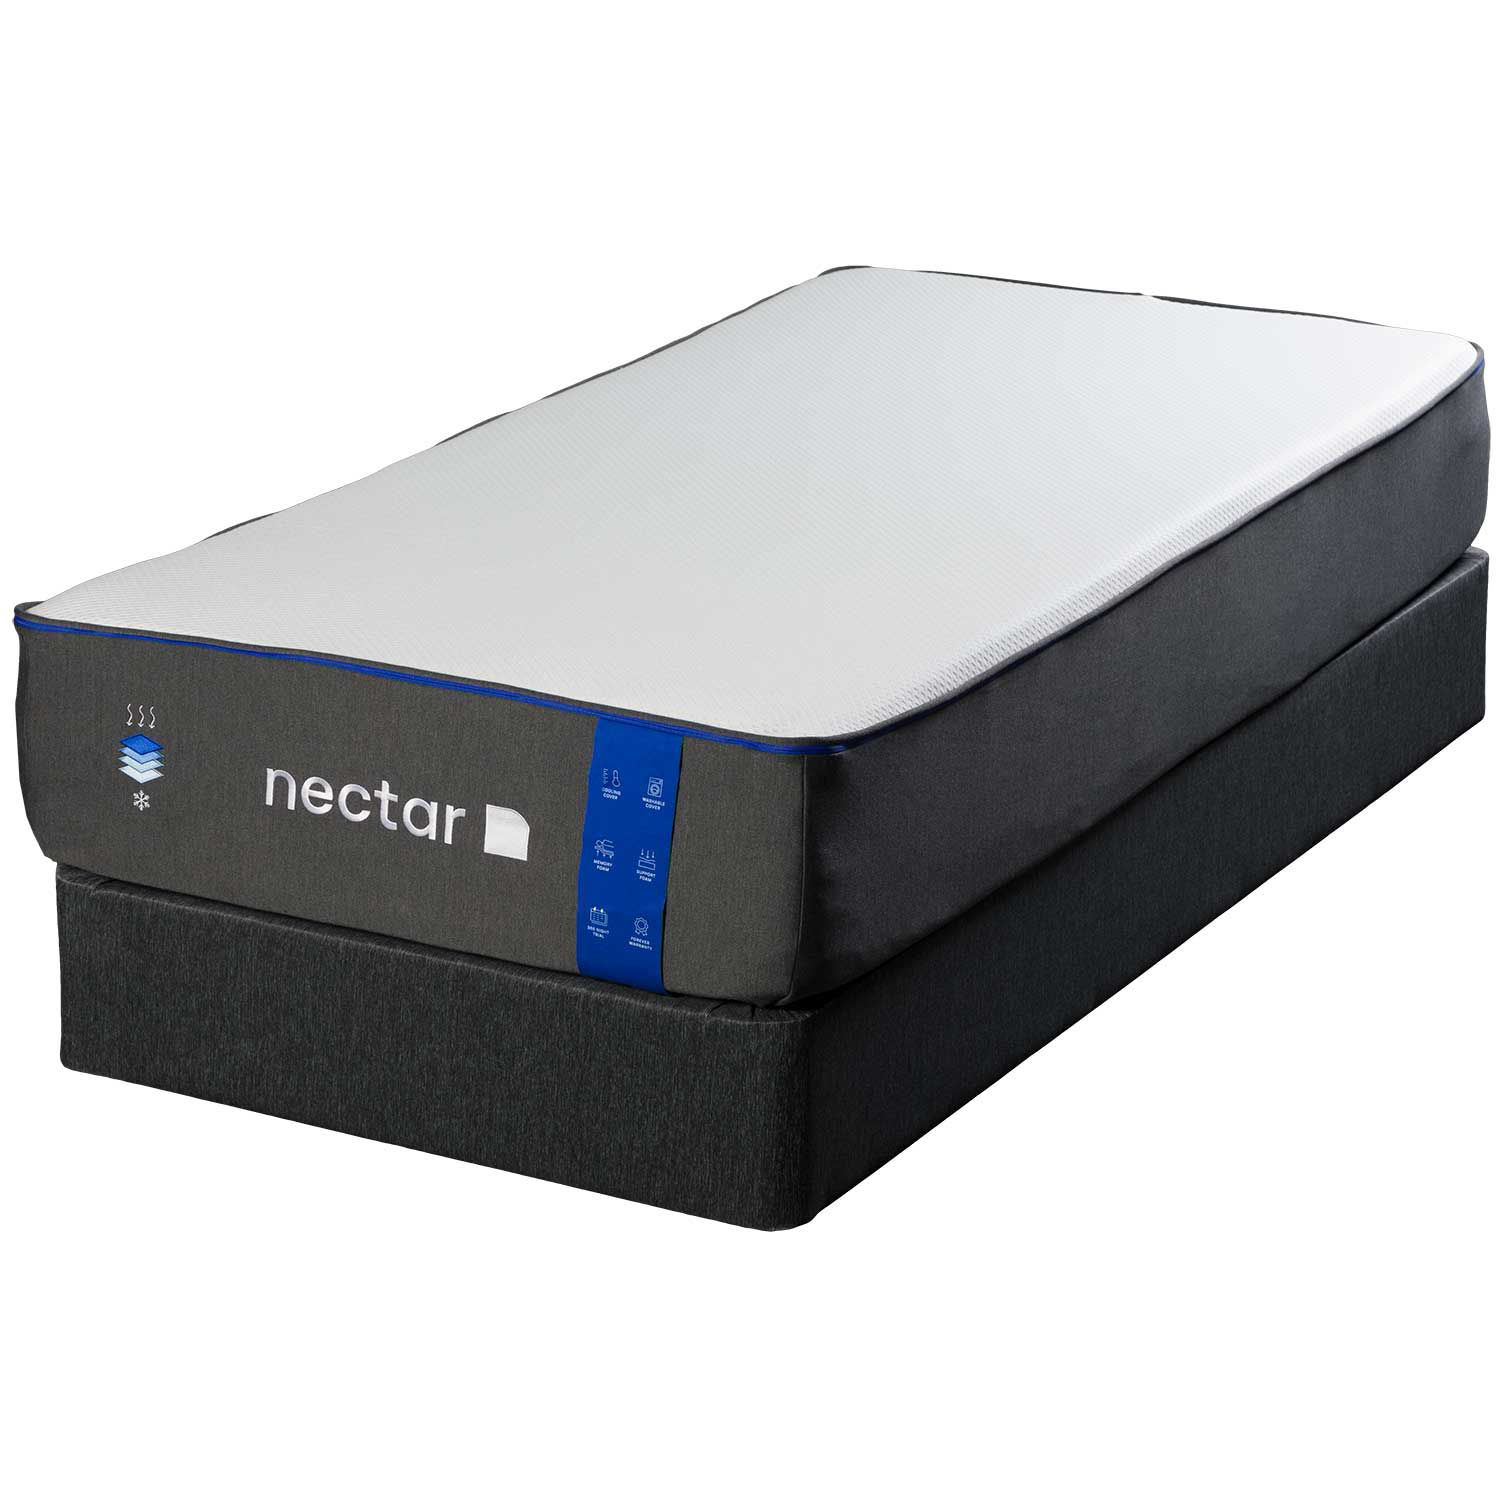 nectar mattresses